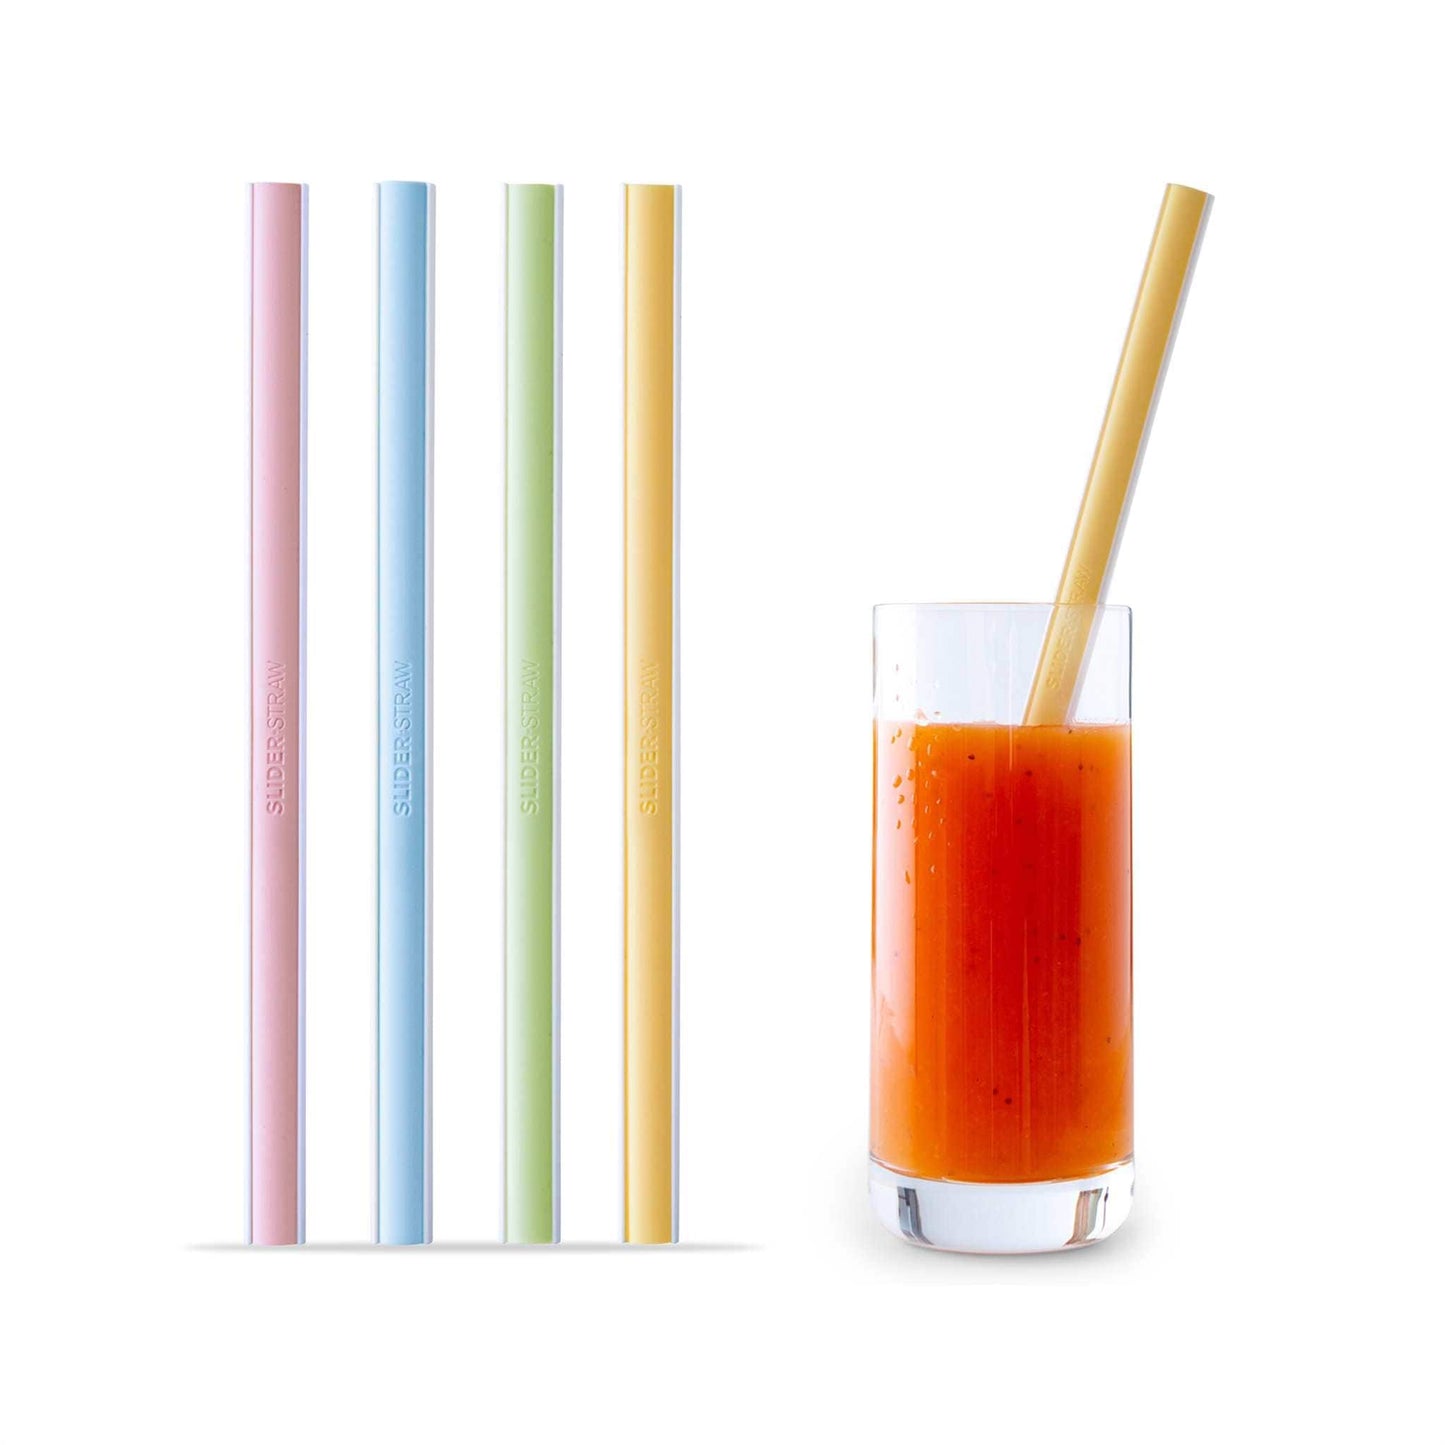 Faerly Straws SliderStraw - The Smart Reusable Drinking Straw - 4 Pack